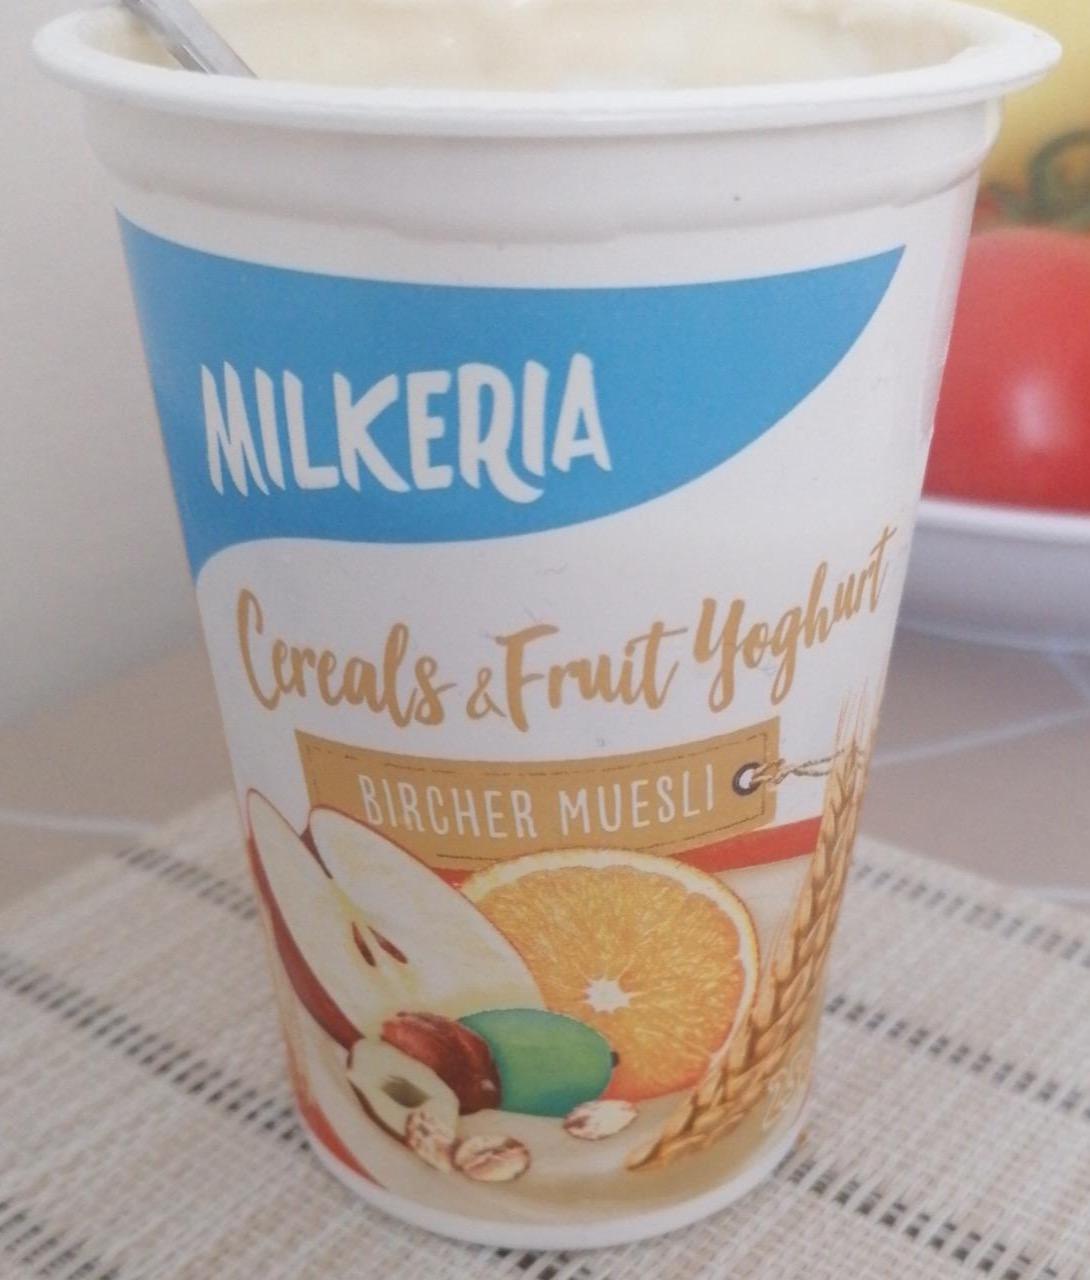 Képek - Cereals & fruit joghurt Milkeria